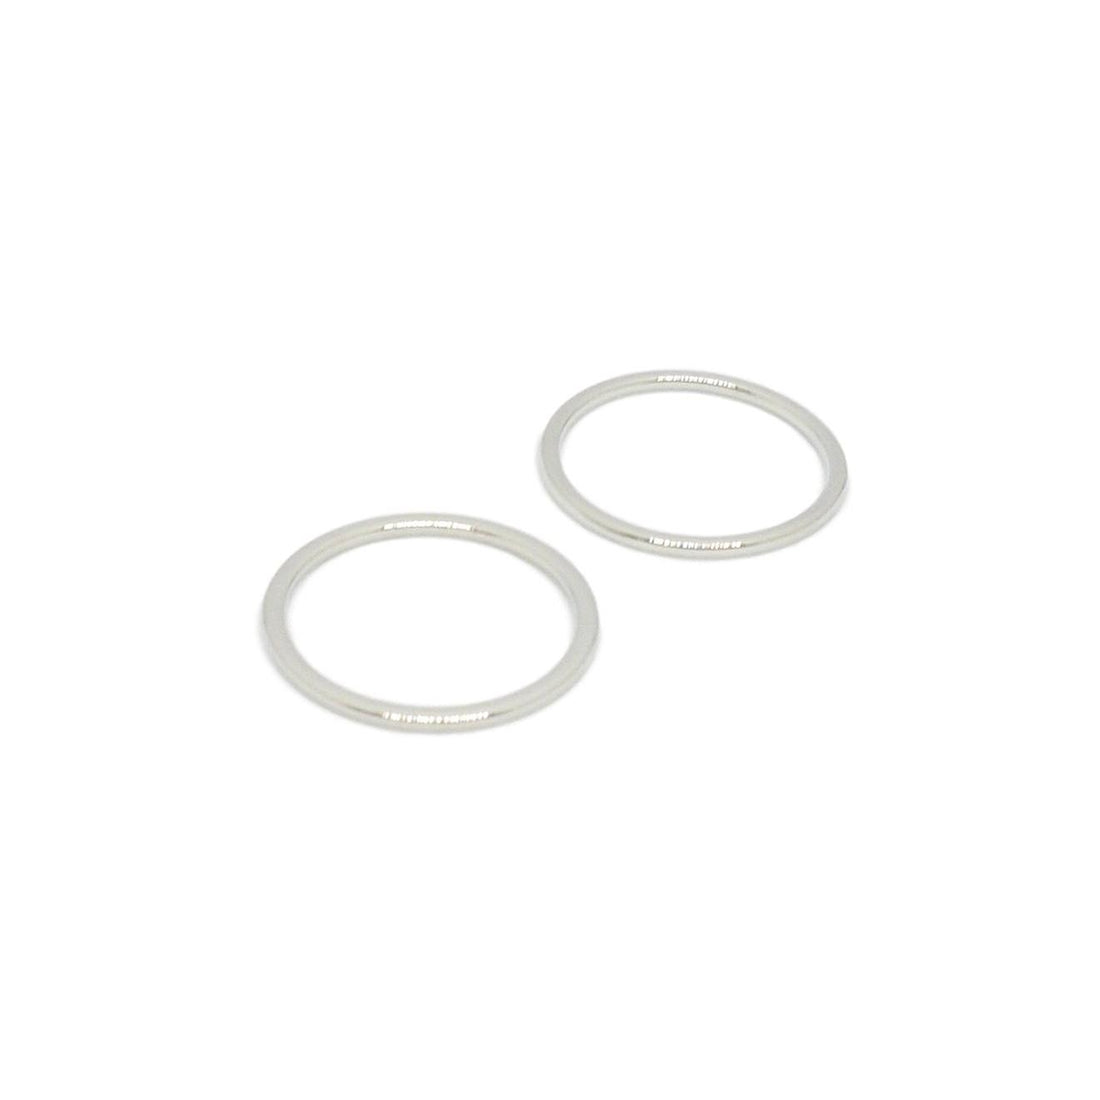 Rings - Bra or Swimwear - Mat Silver Plated Zamak - 7 sizes - Allied Trimmings Inc